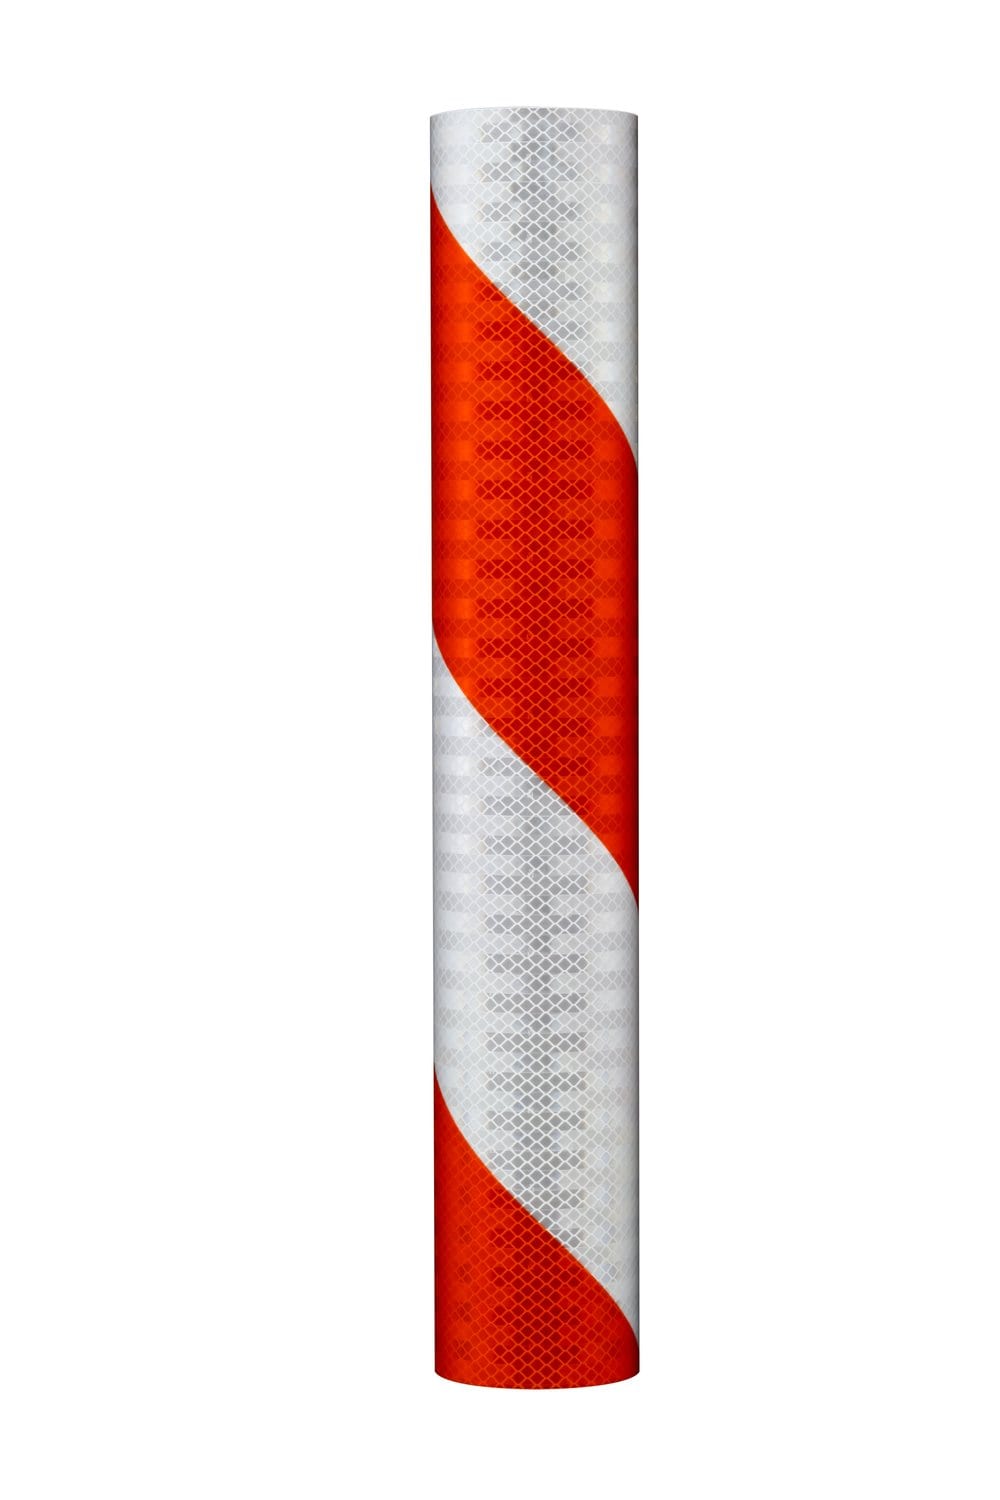 7010389483 - 3M Flexible Prismatic Reflective Barricade Sheeting 3336L Orange/White,
6 in stripe/left, 8 in x 100 yd